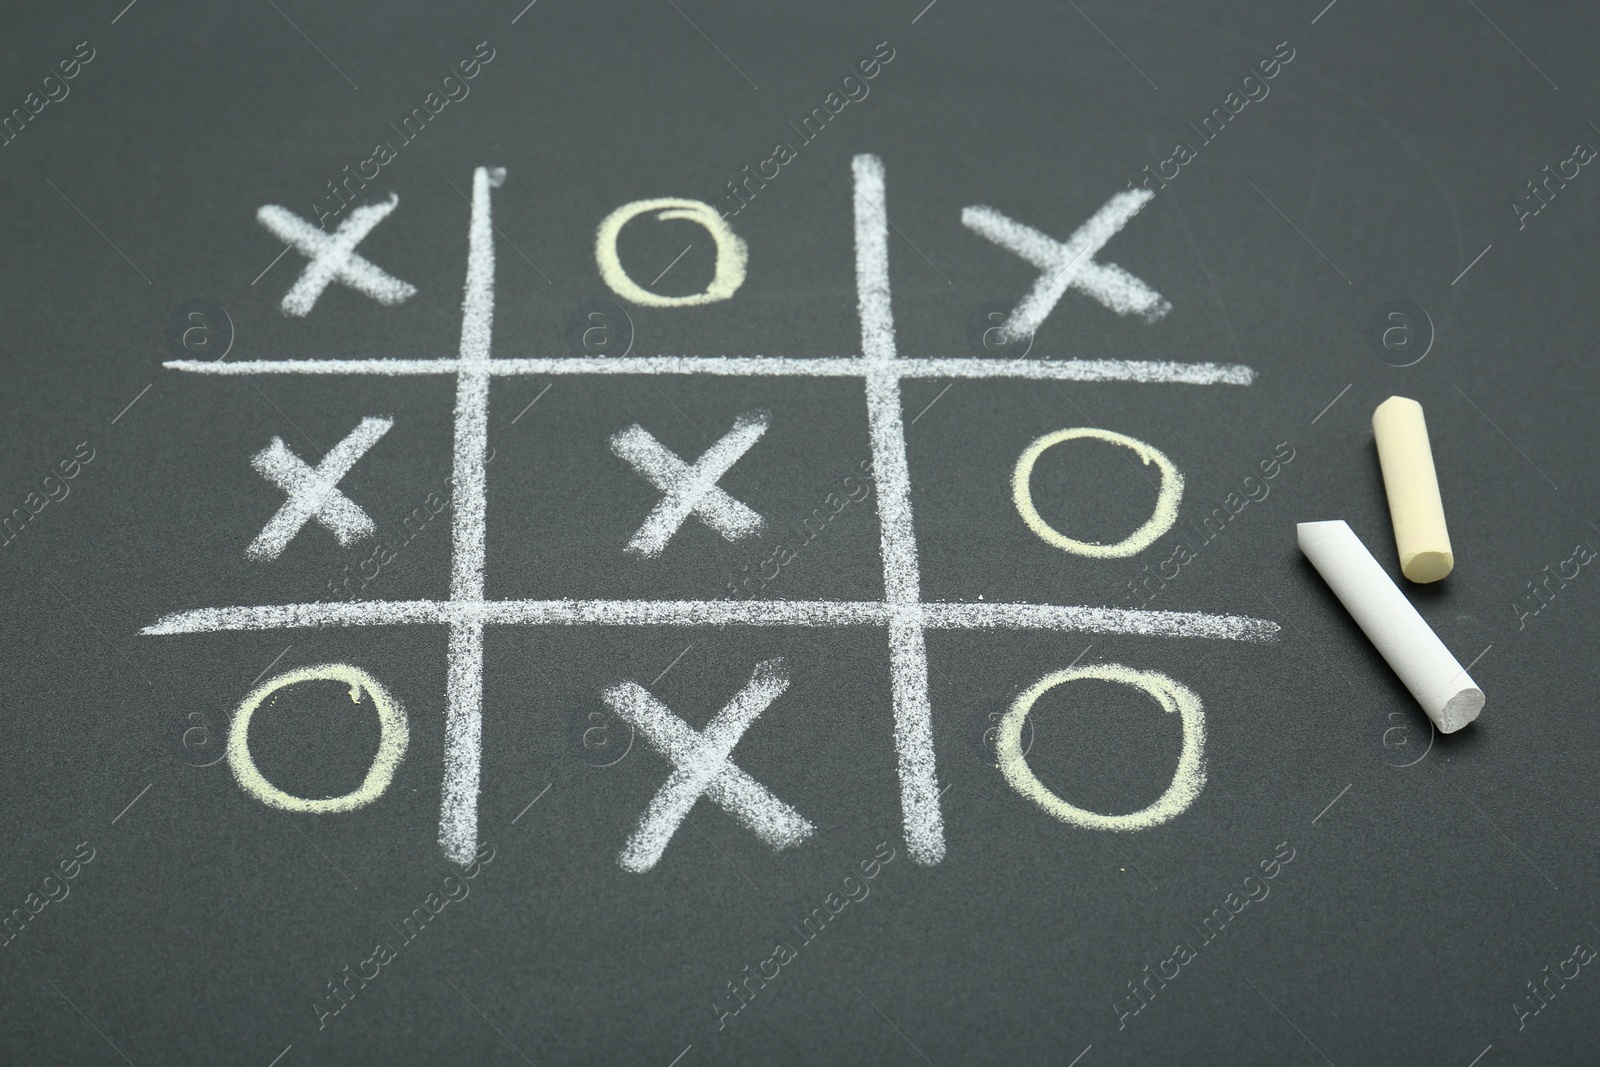 Photo of Tic tac toe game drawn on chalkboard